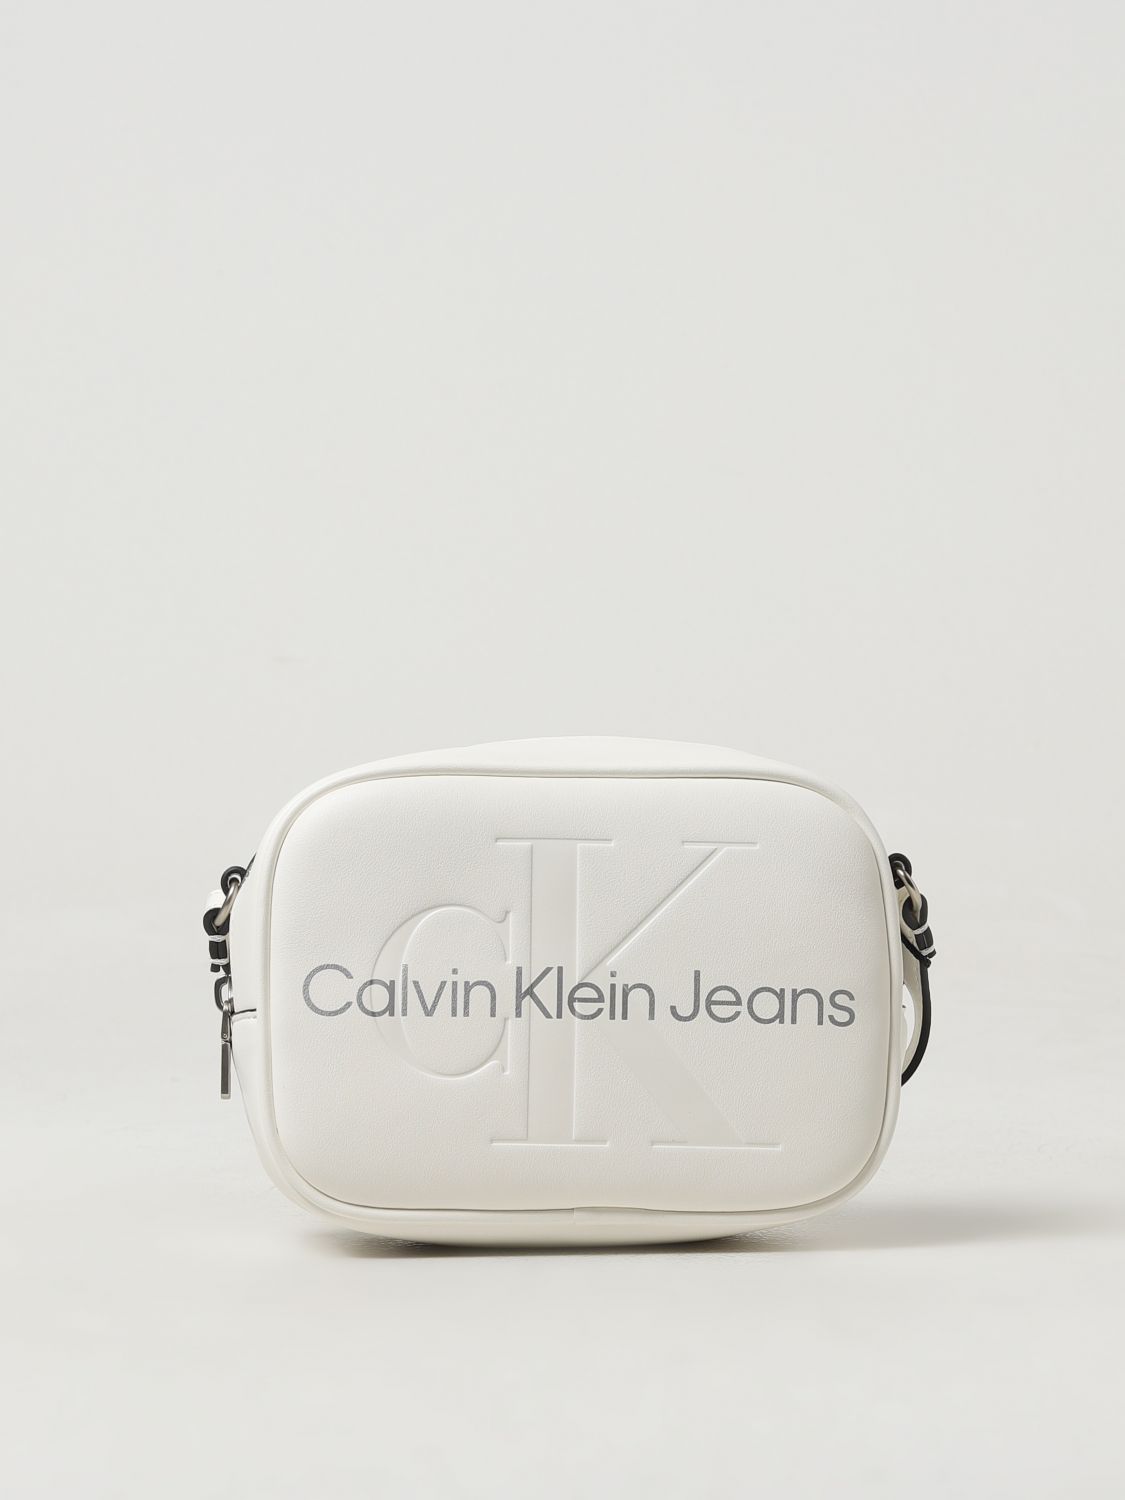 Ck Jeans Mini Bag CK JEANS Woman colour White